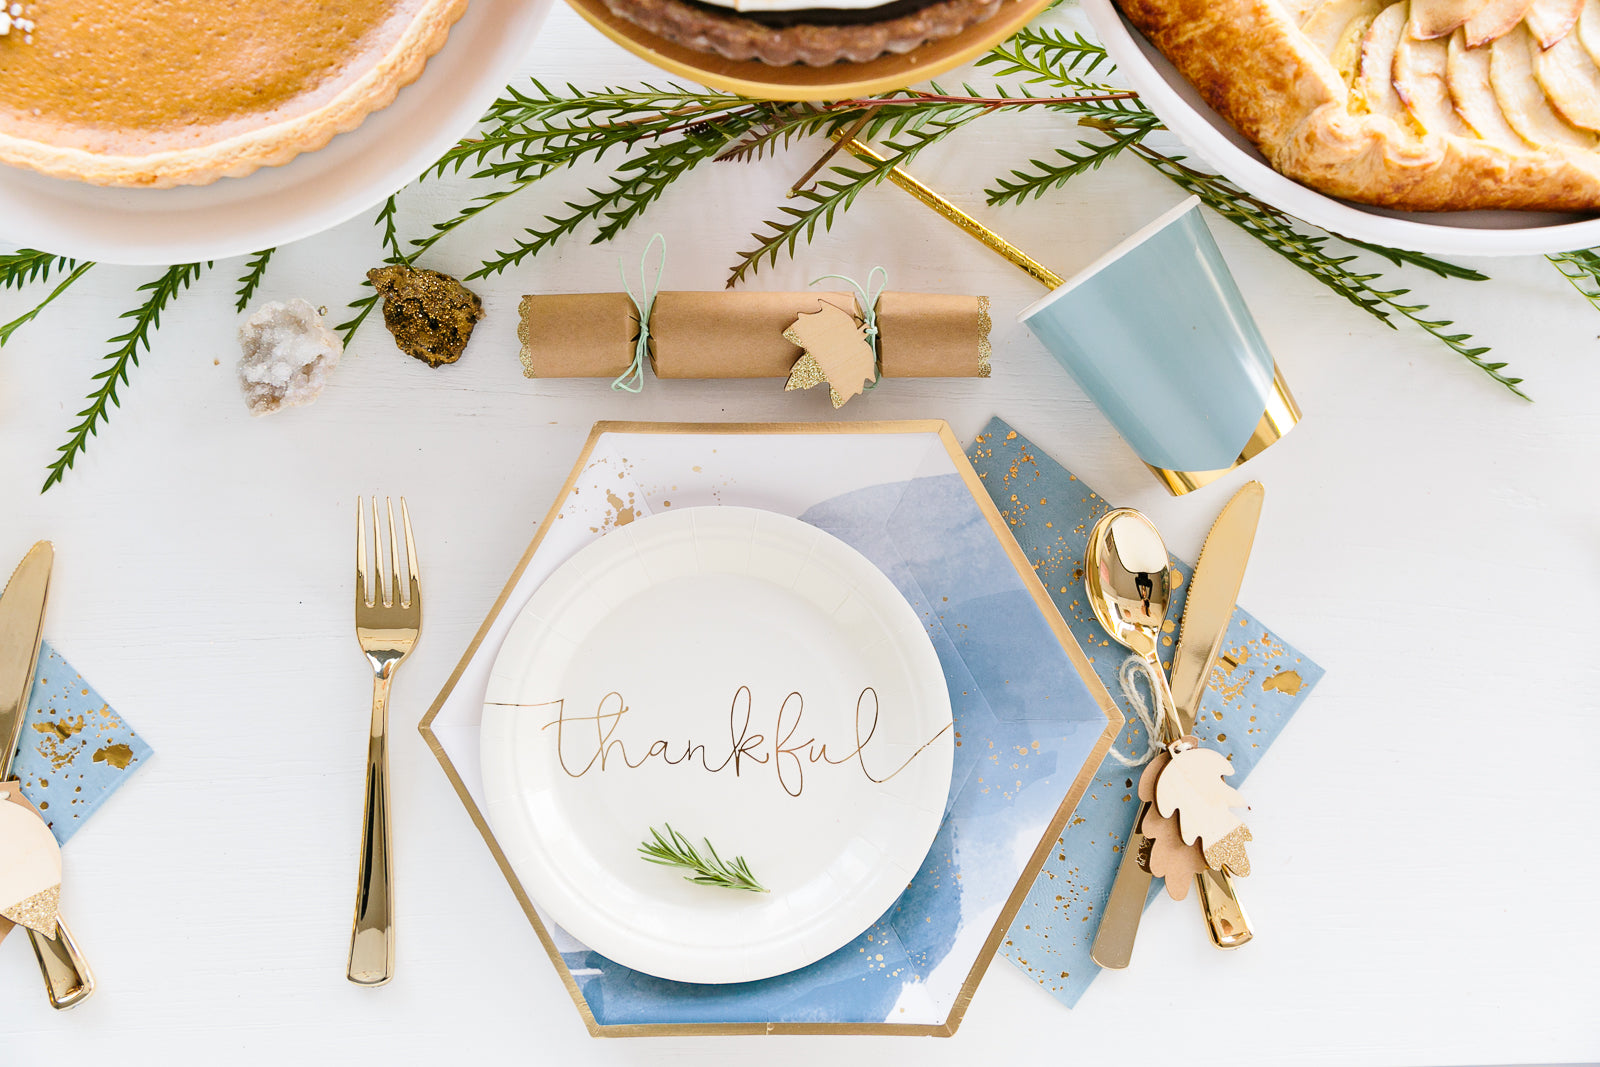 Thanksgiving tableware